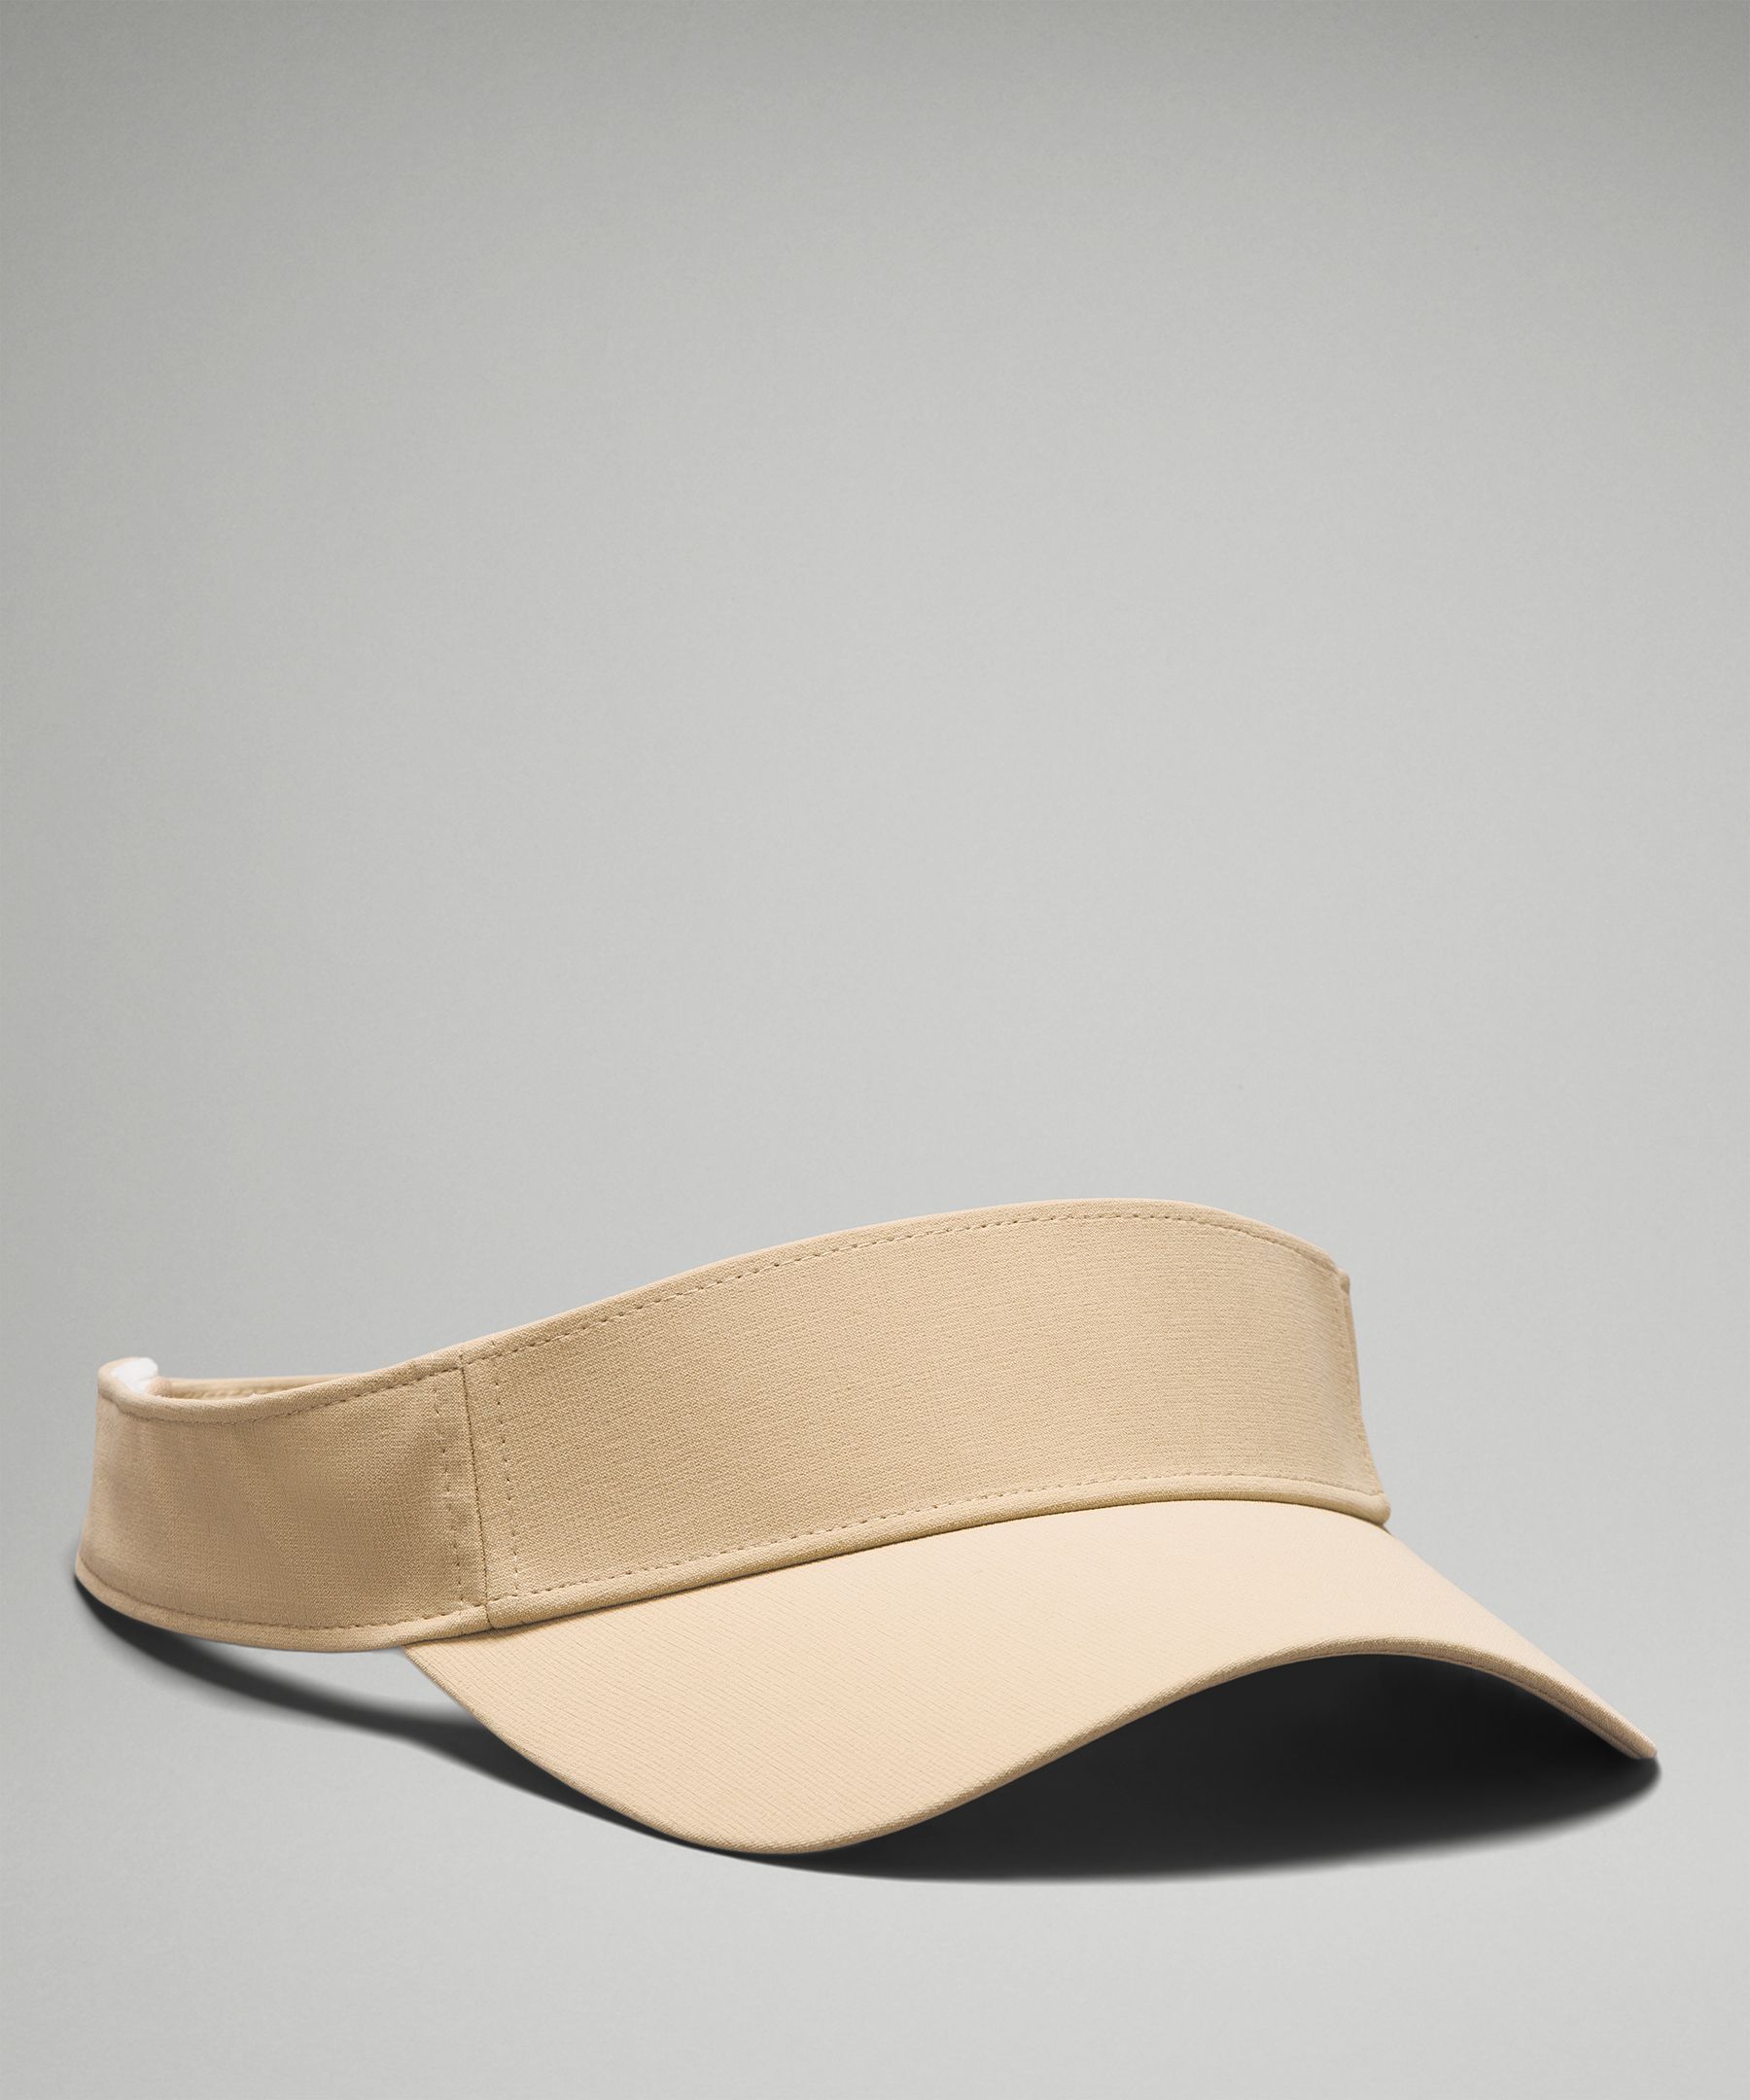 lululemon lululemon Removable Sweatband All-Sport Visor, Unisex Hats